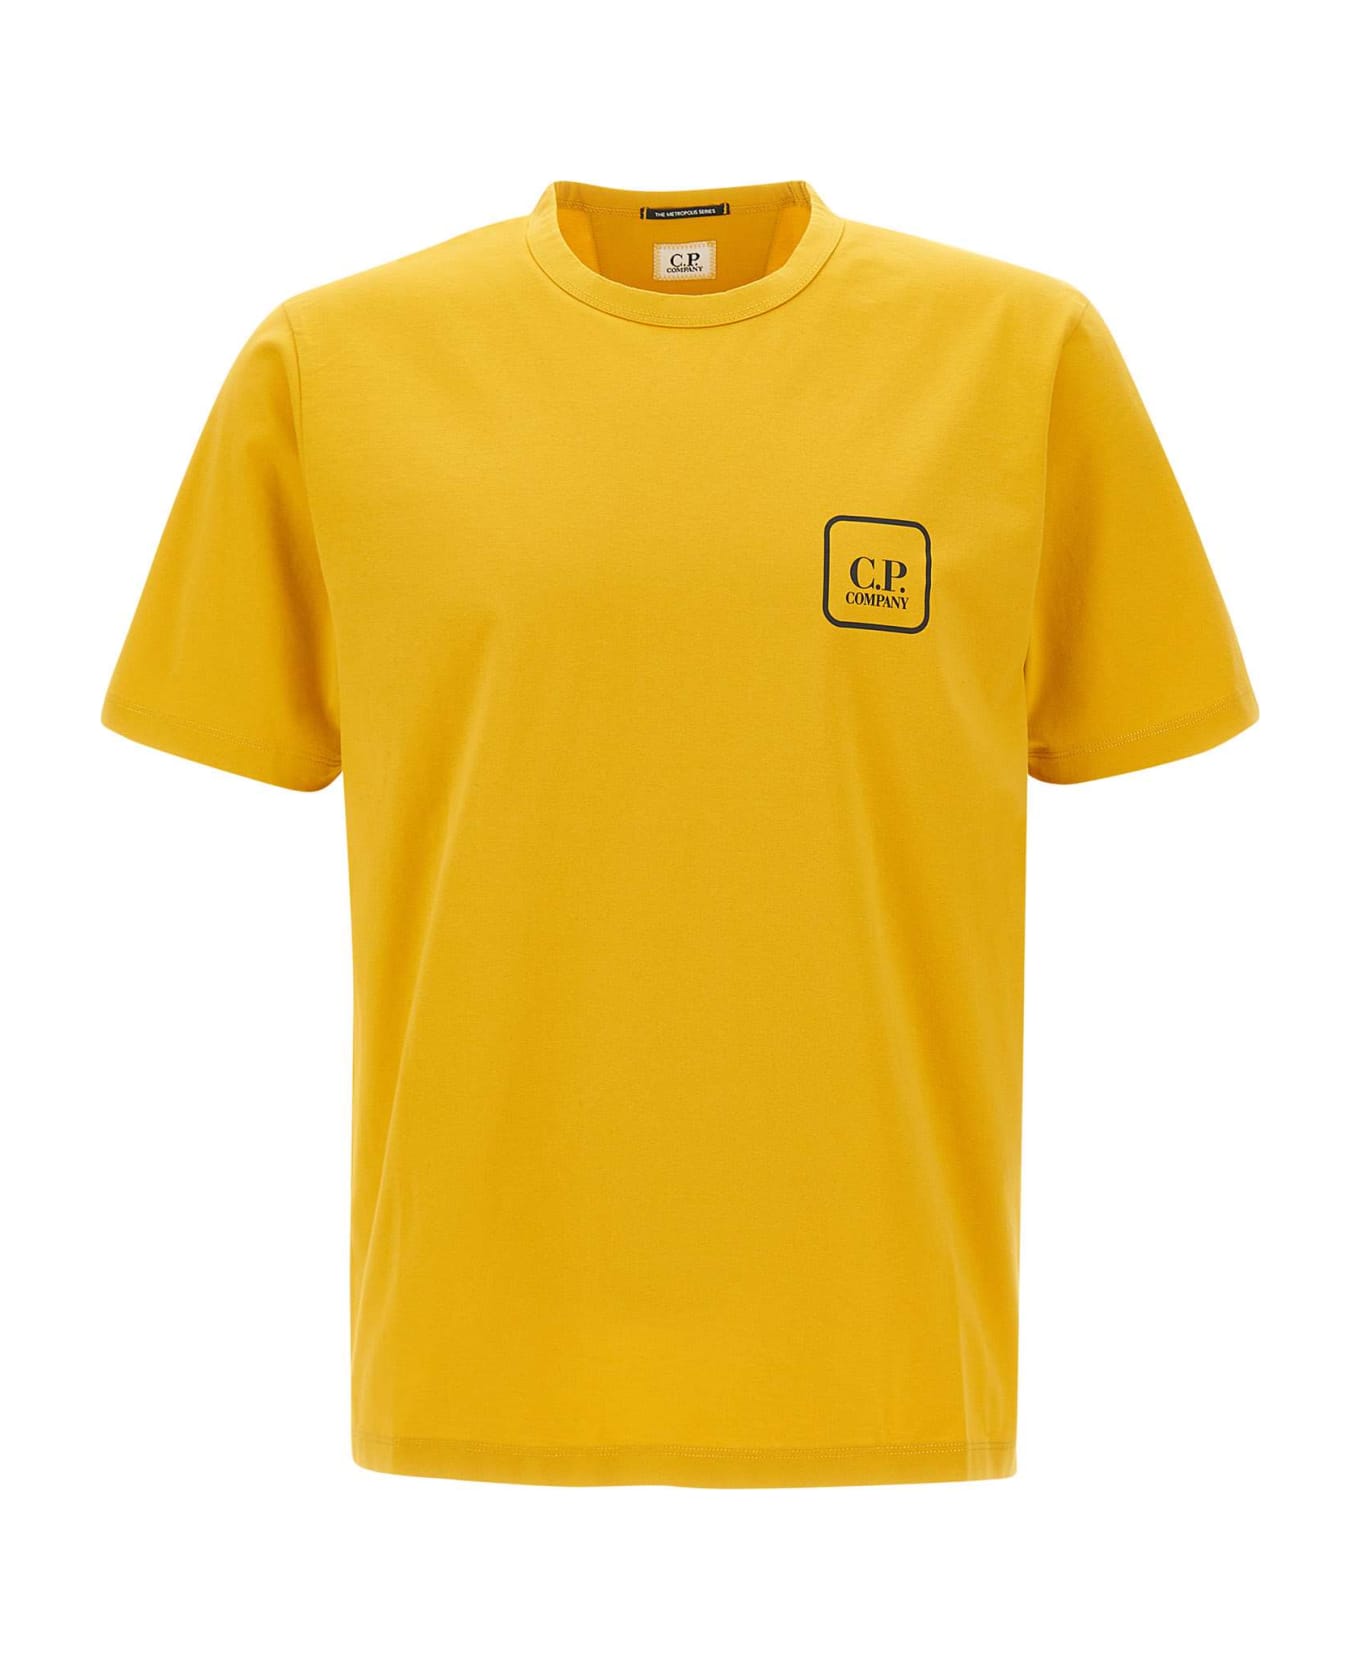 C.P. Company Cotton T-shirt - YELLOW